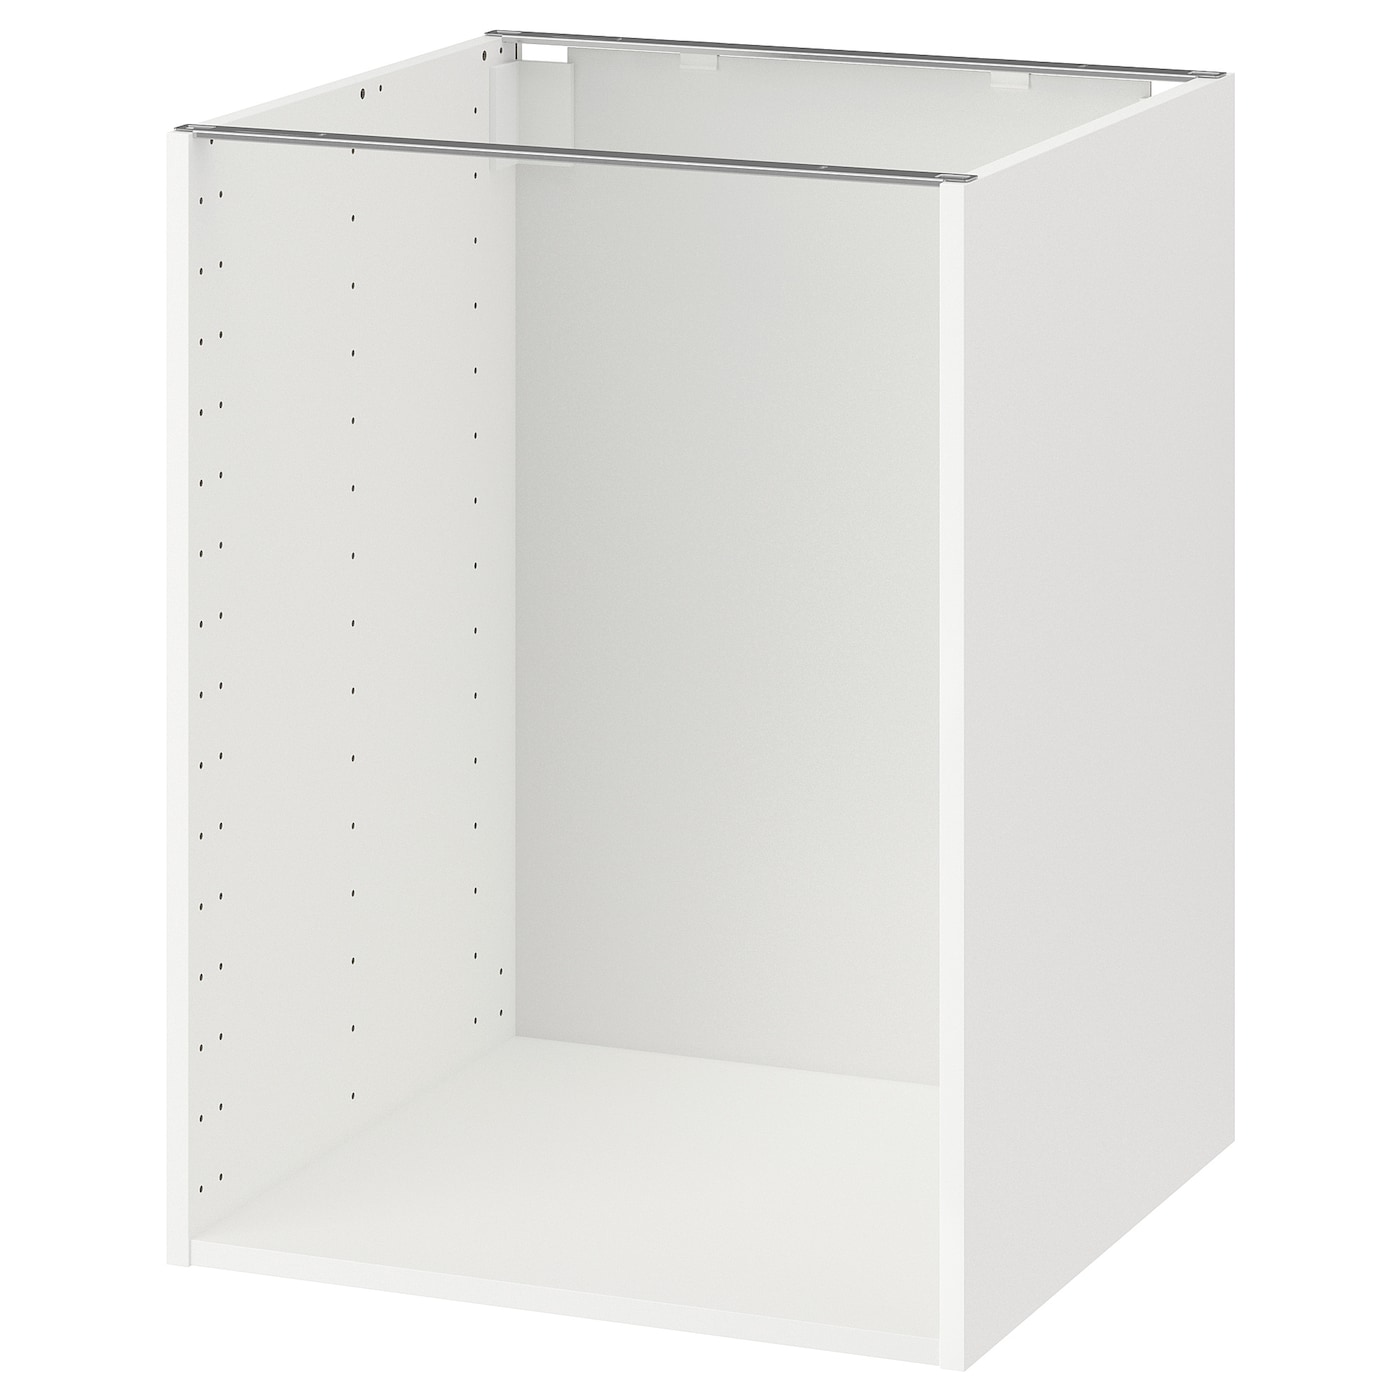 Каркас напольного шкафа - IKEA METOD, 60x60x80 см, белый МЕТОД ИКЕА